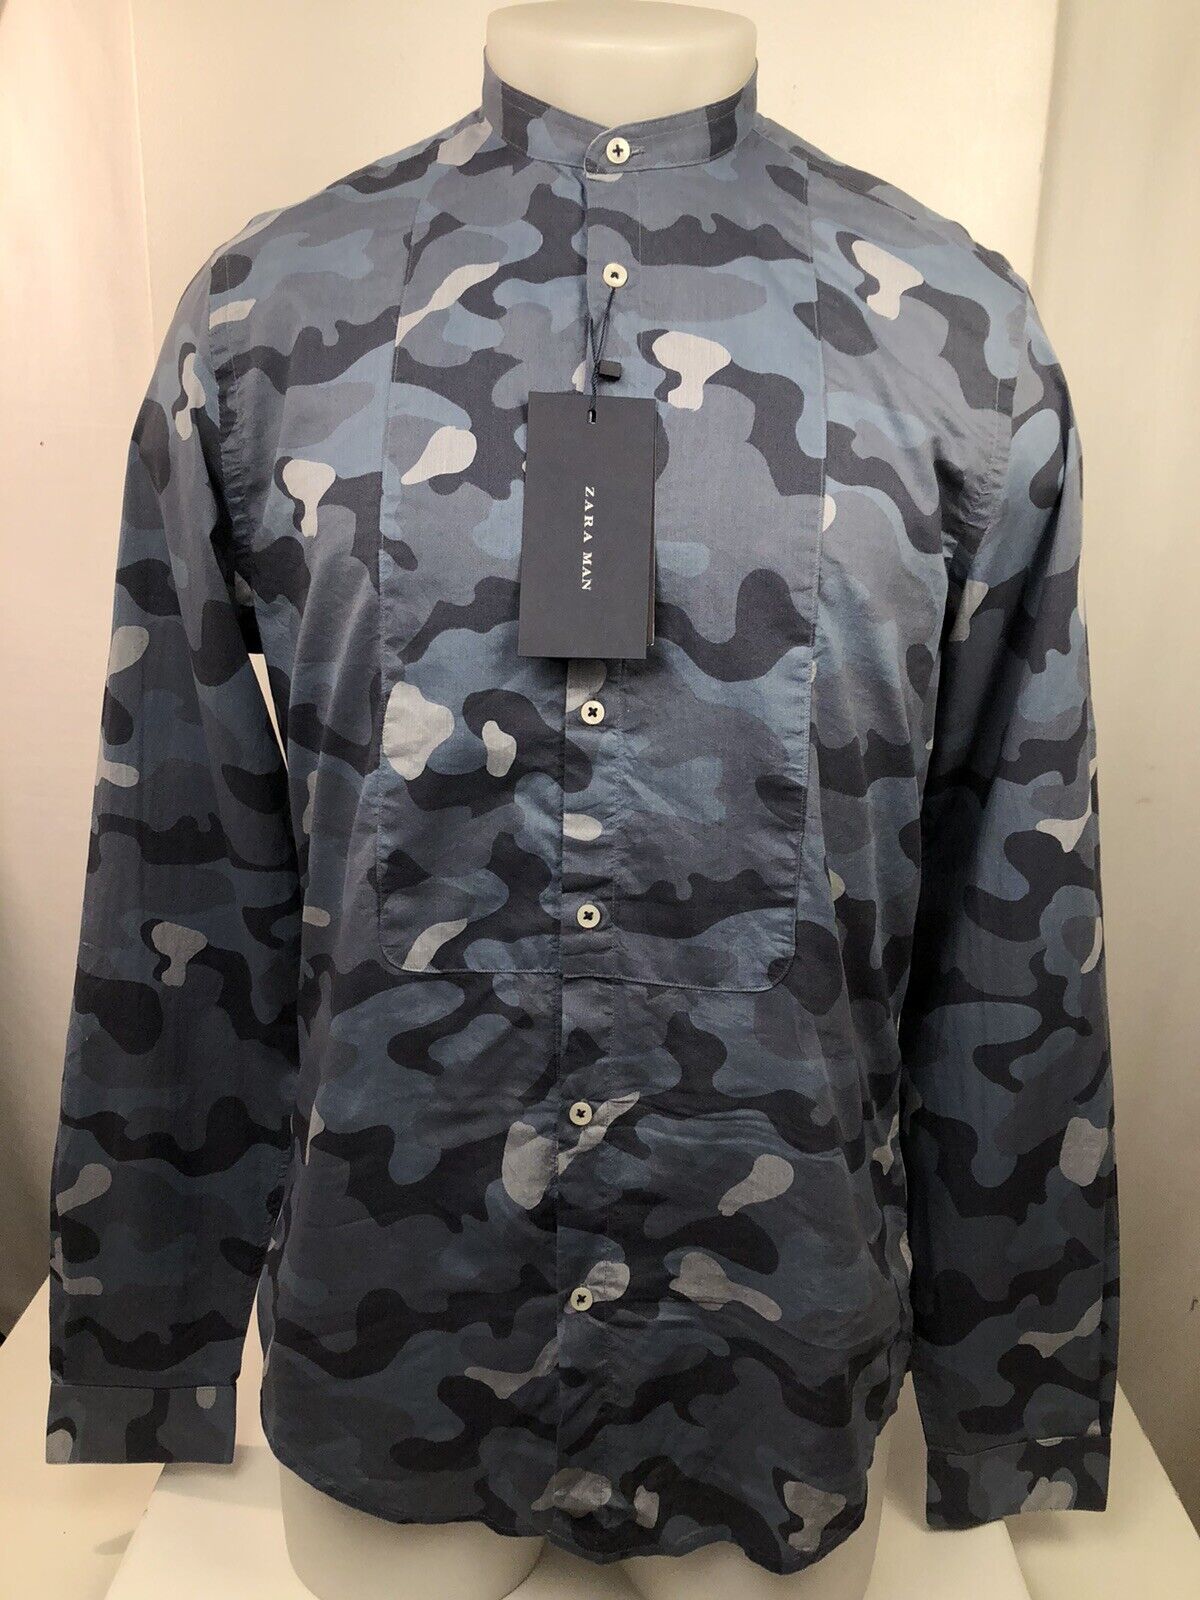 New w Tag - ZARA MAN Blue/Gray Camouflage Slim Fit Collarless Sm. Shirt  MSRP $40